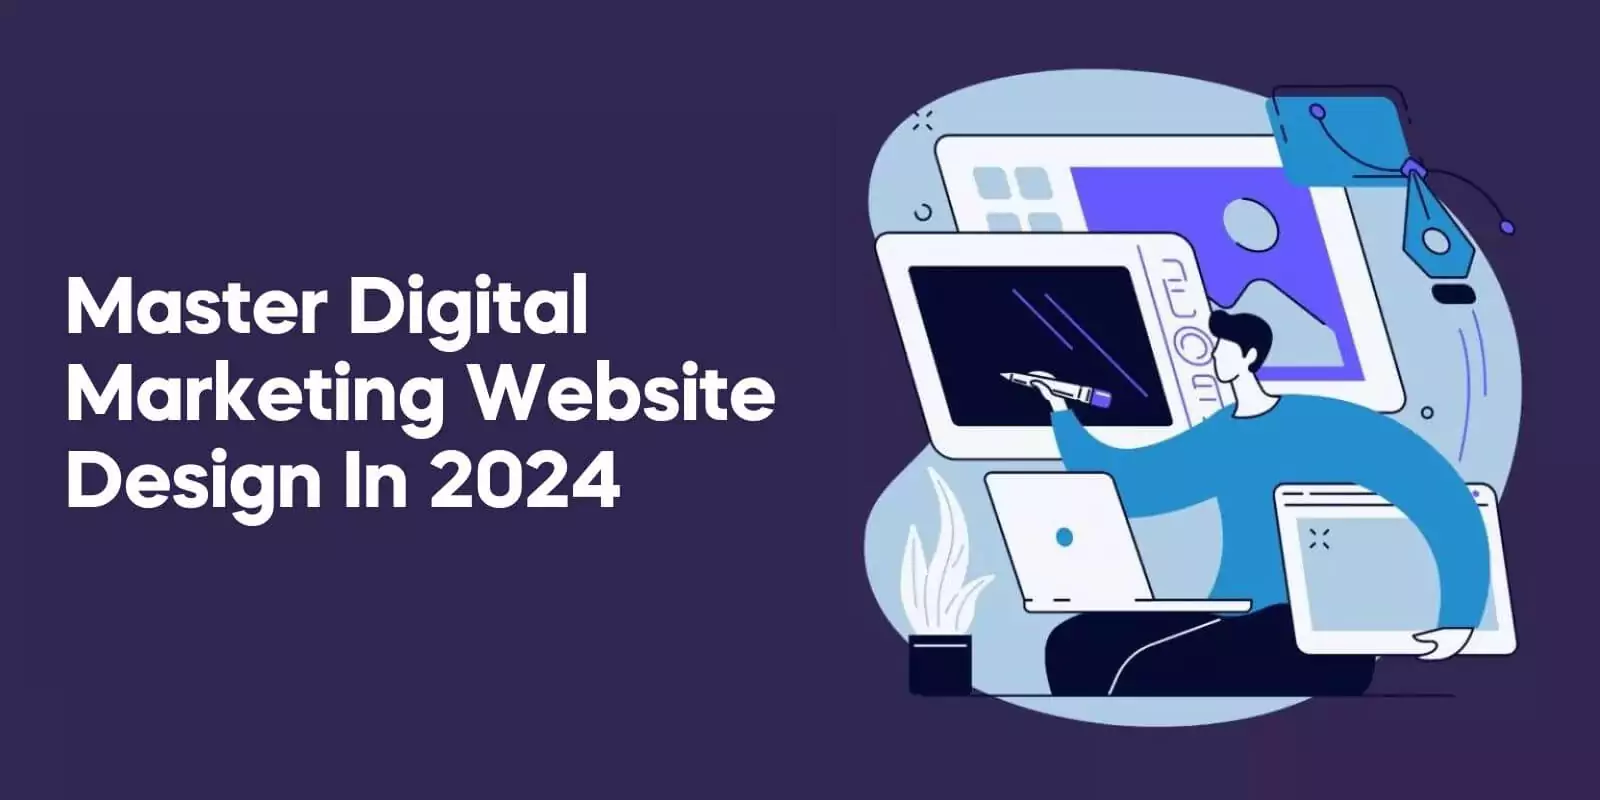 Master Digital Marketing Website Design in 2024